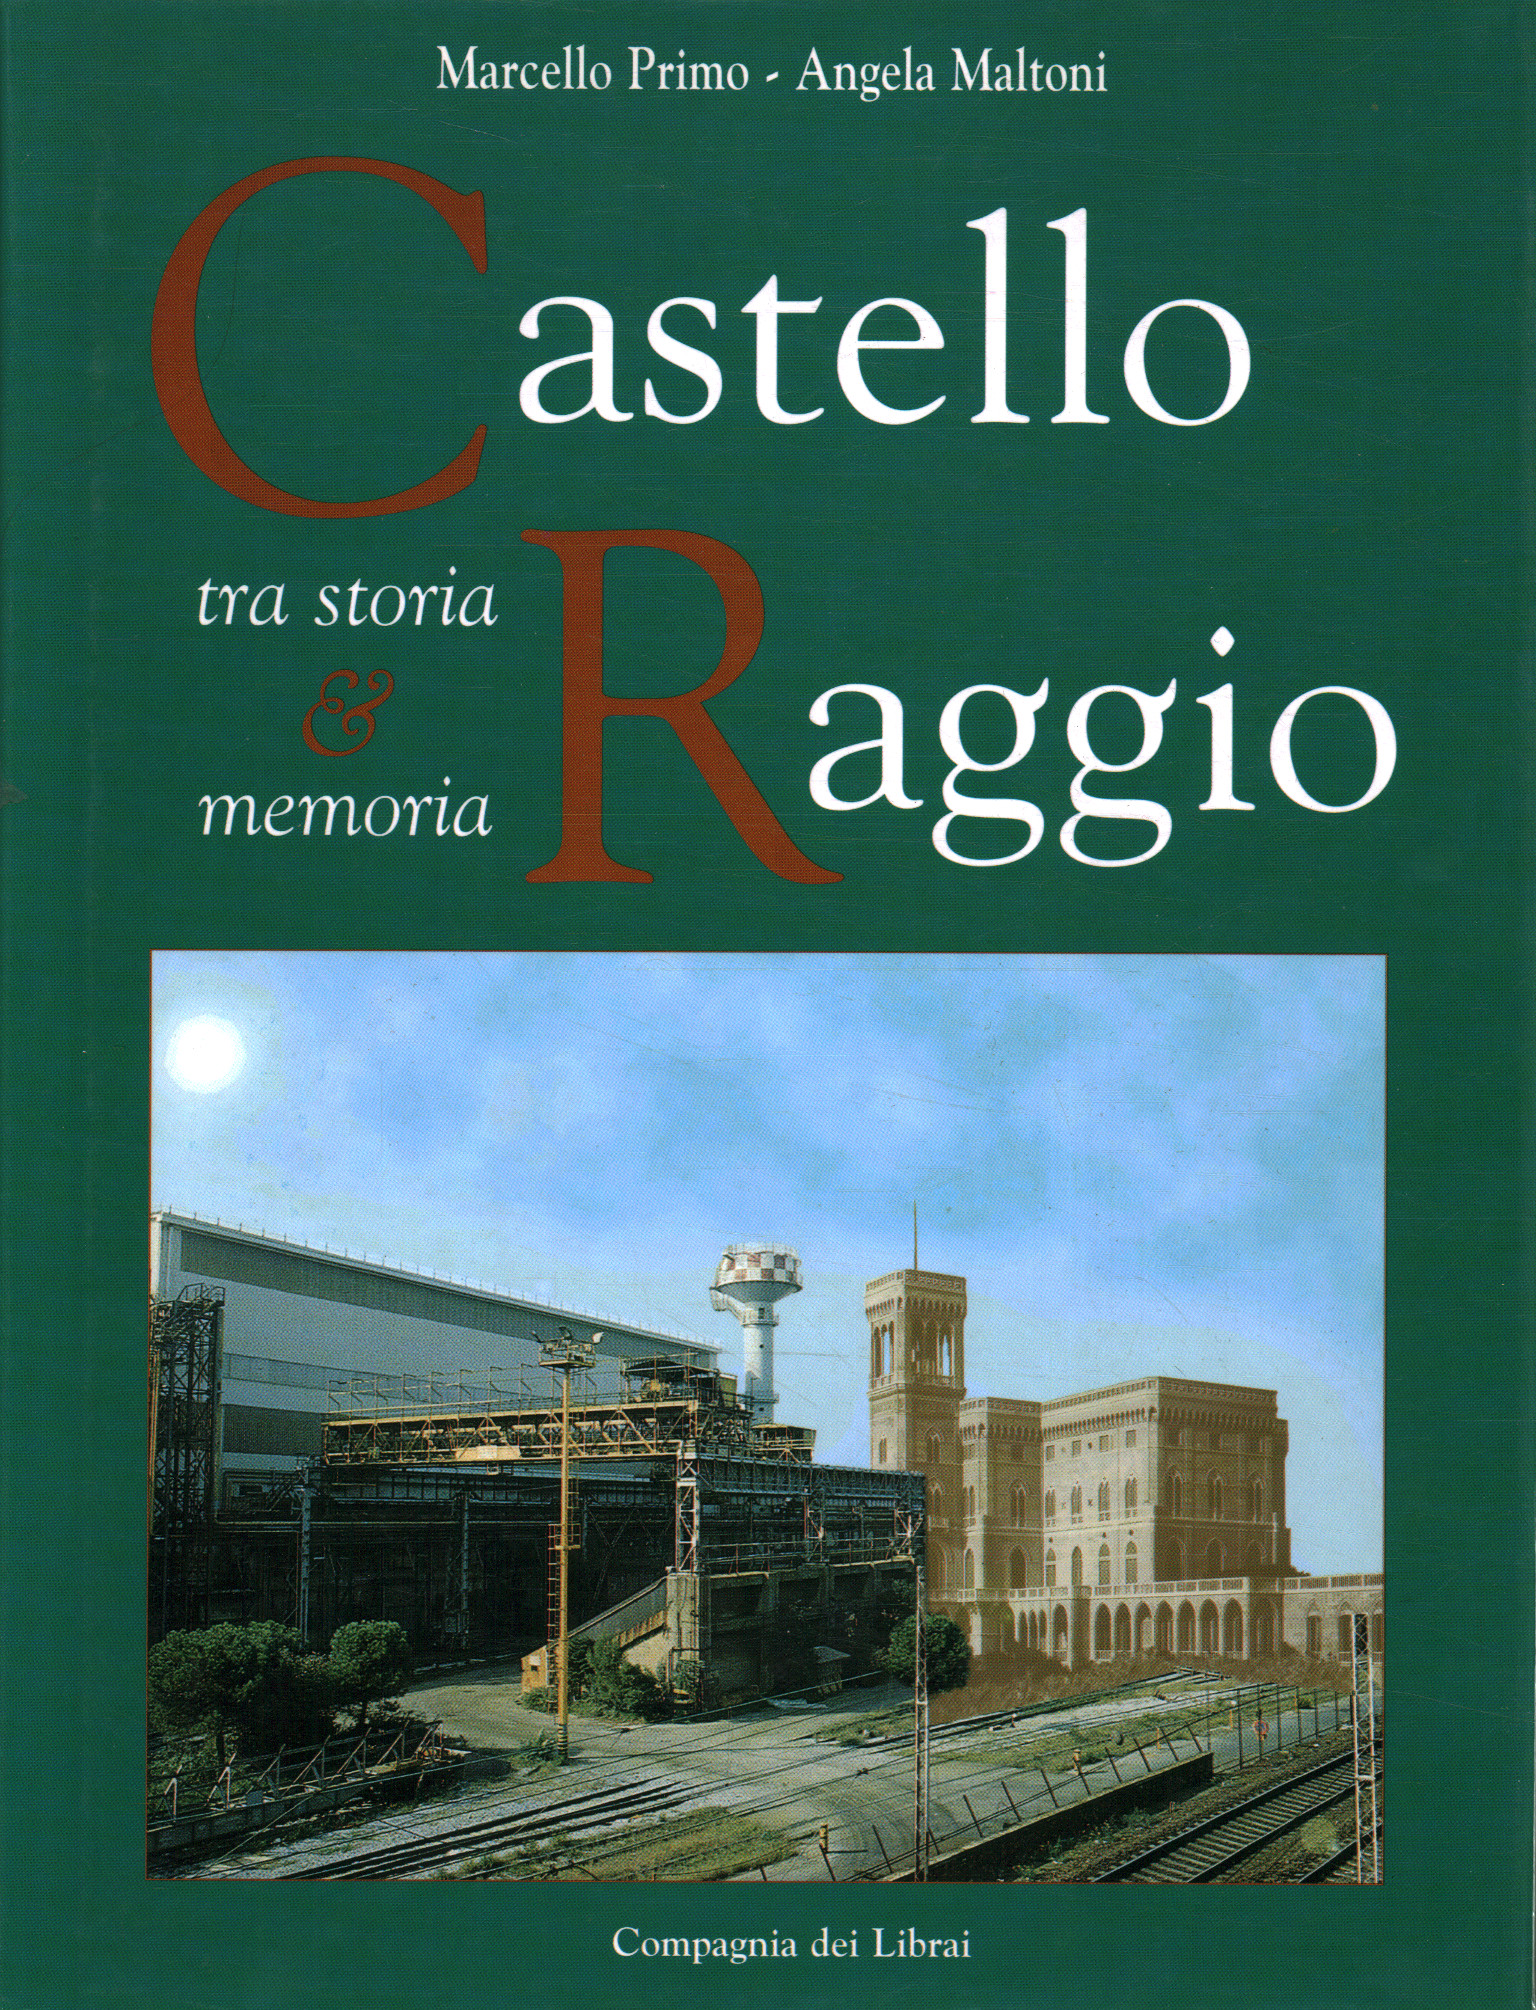 Castello Raggio between history and memory